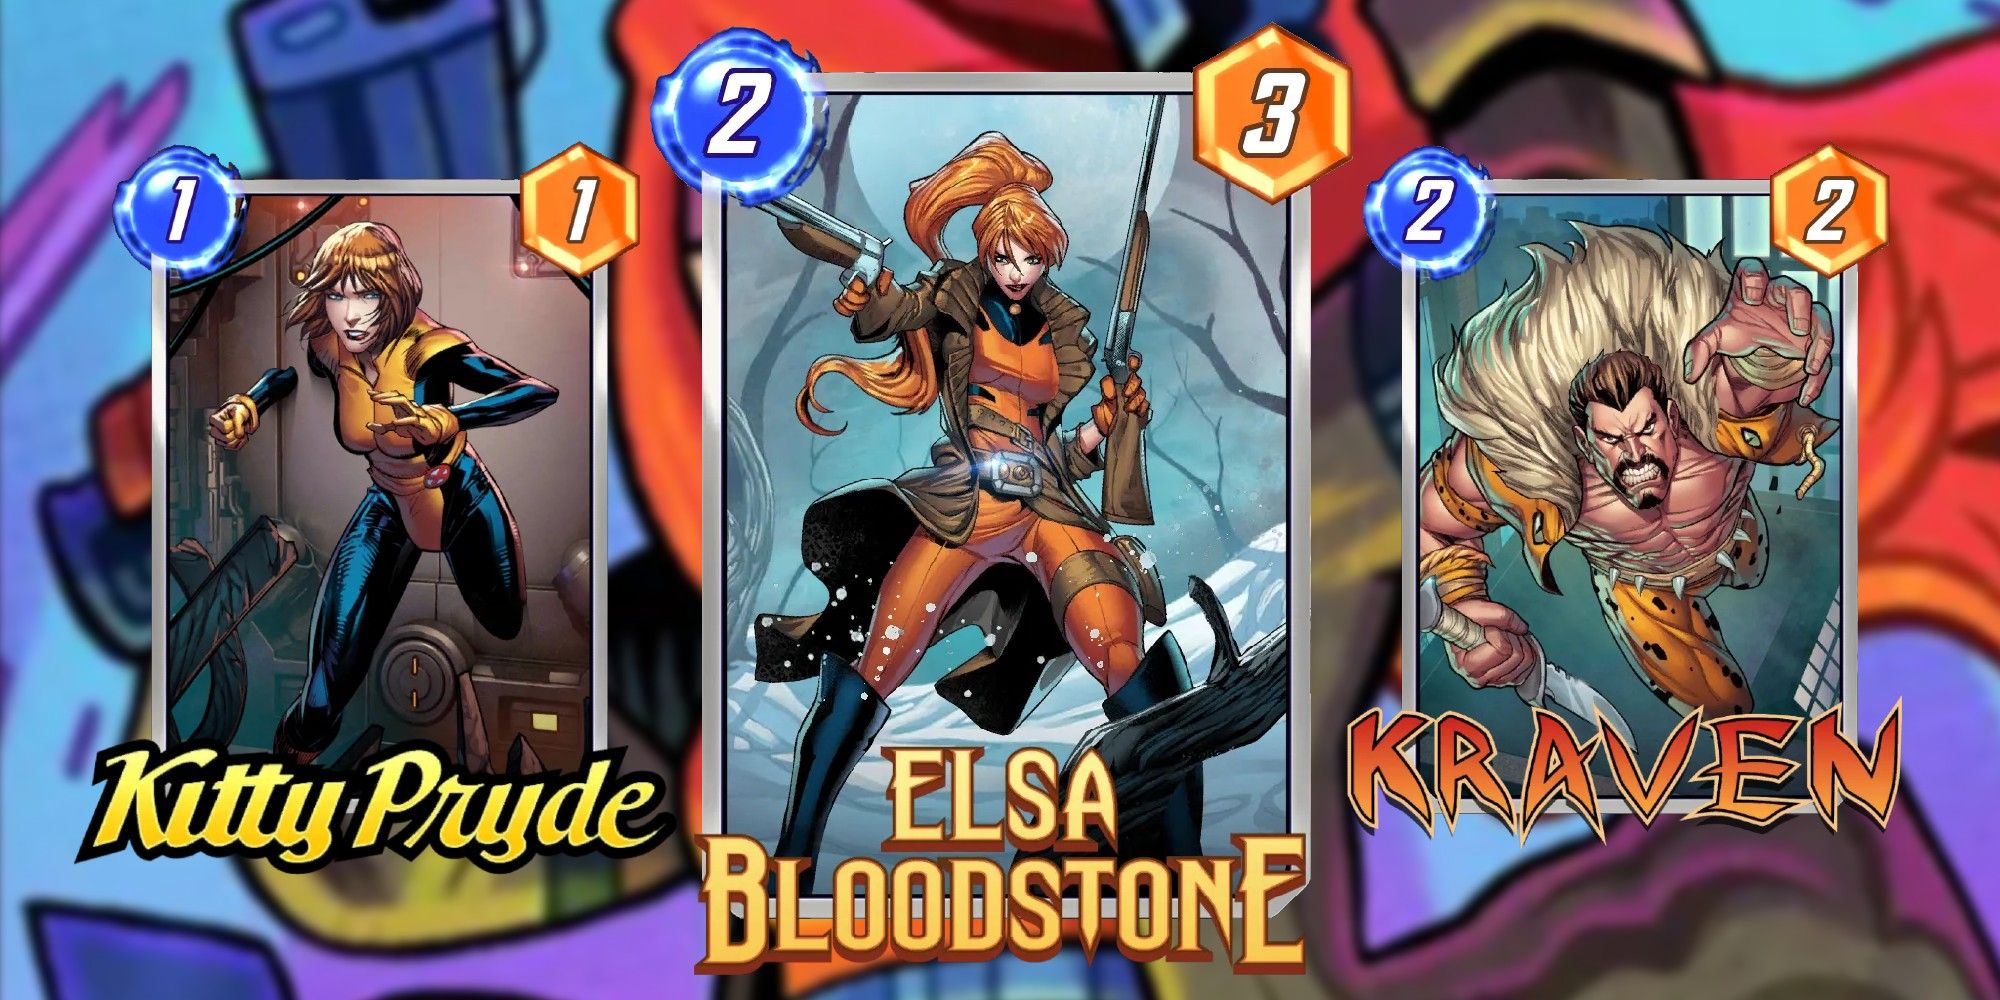 Marvel Snap Cards Kitty Pryde, Elsa Bloodstone and Kraven